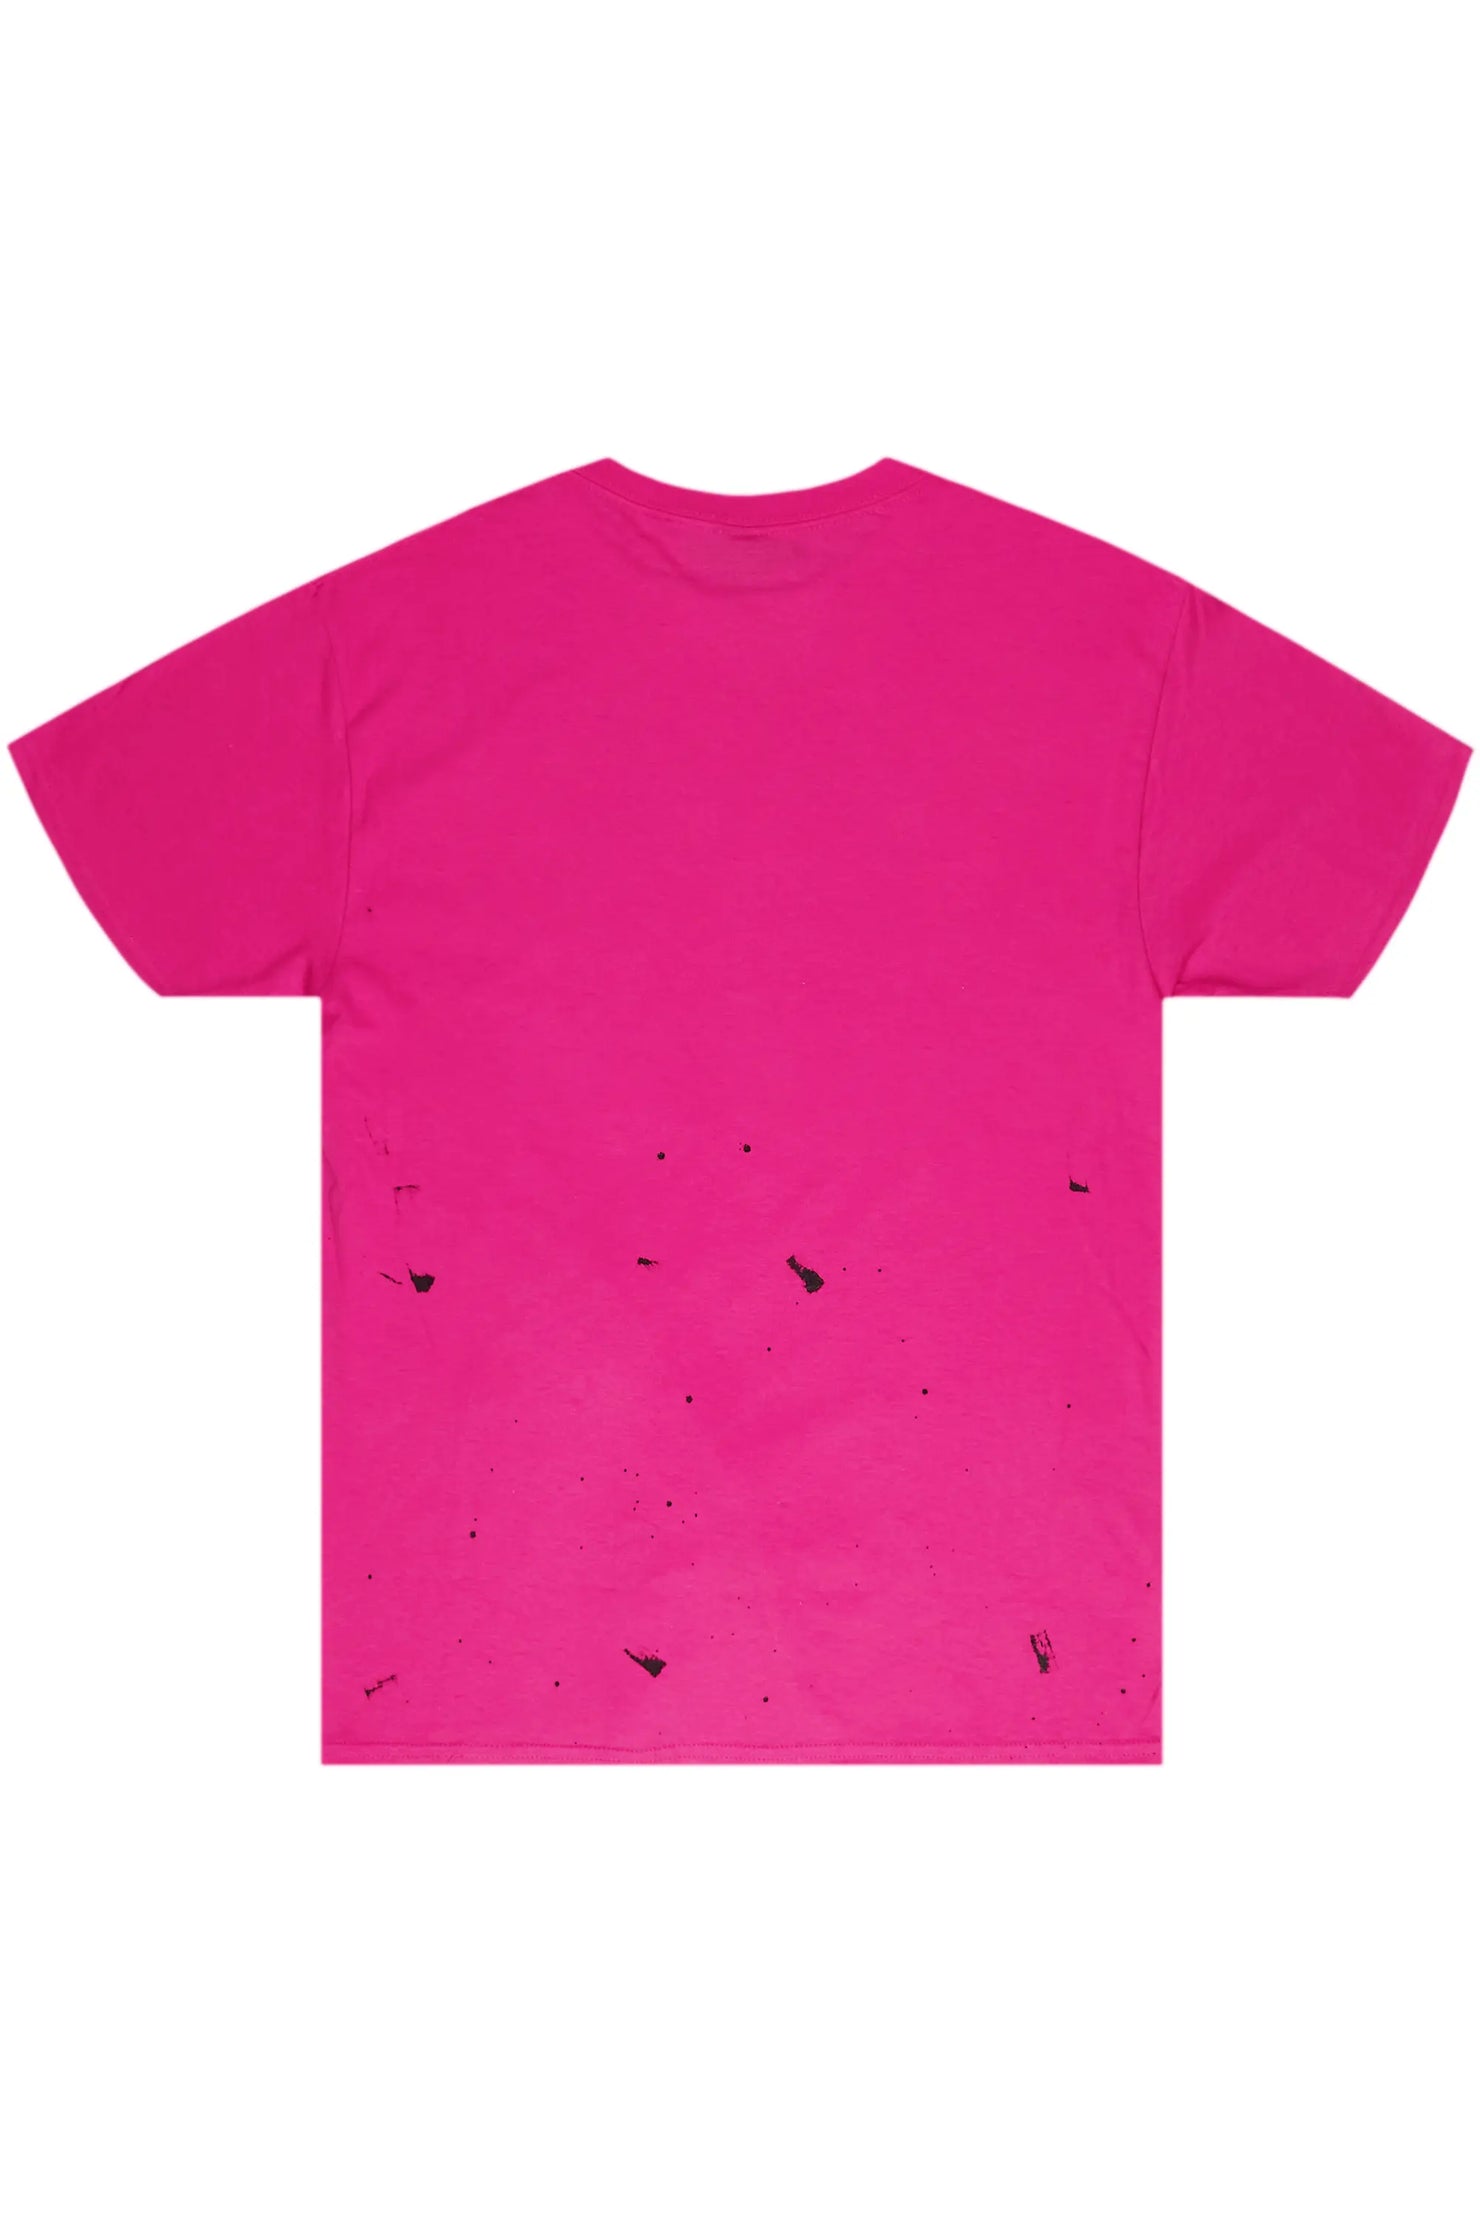 Raffer Fuchsia Graphic T-Shirt